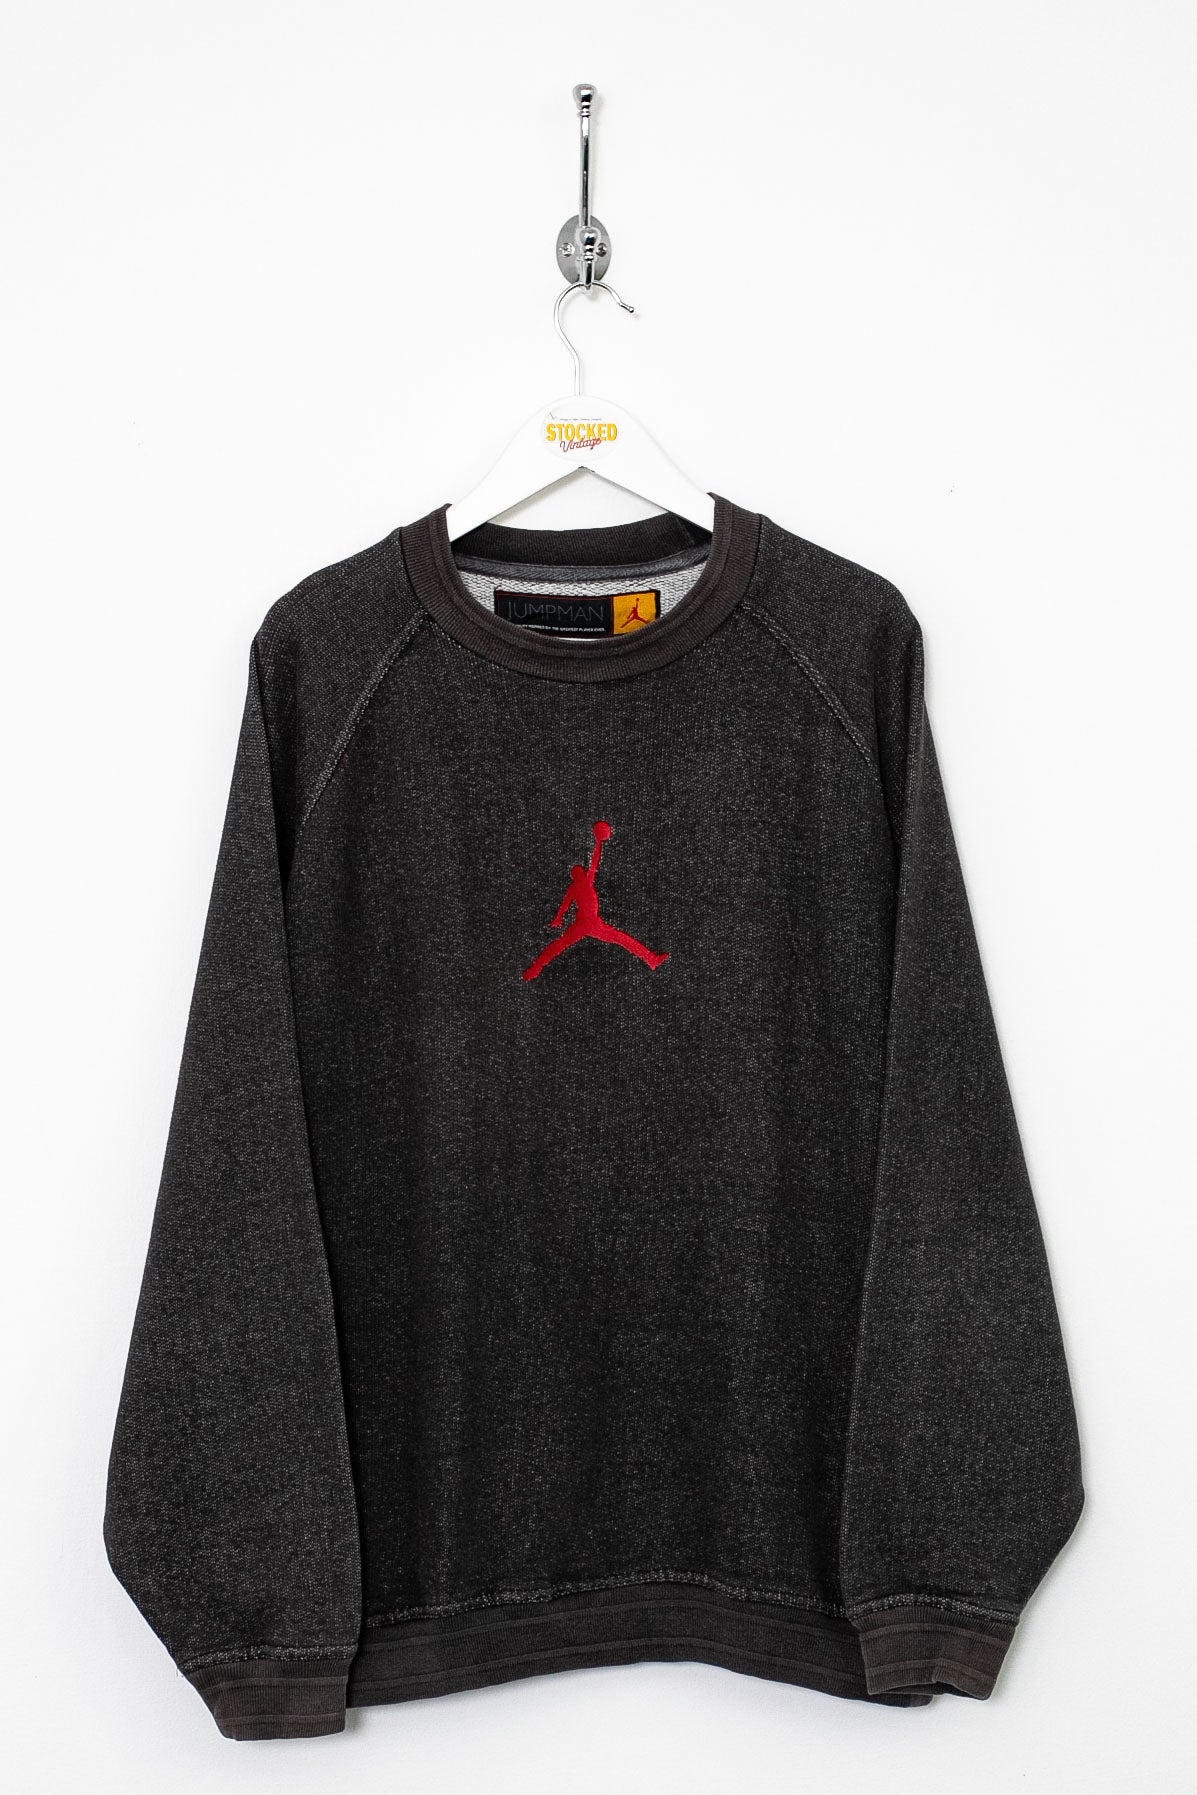 Rare 90s Nike Jordan Jumpman Sweatshirt (M)